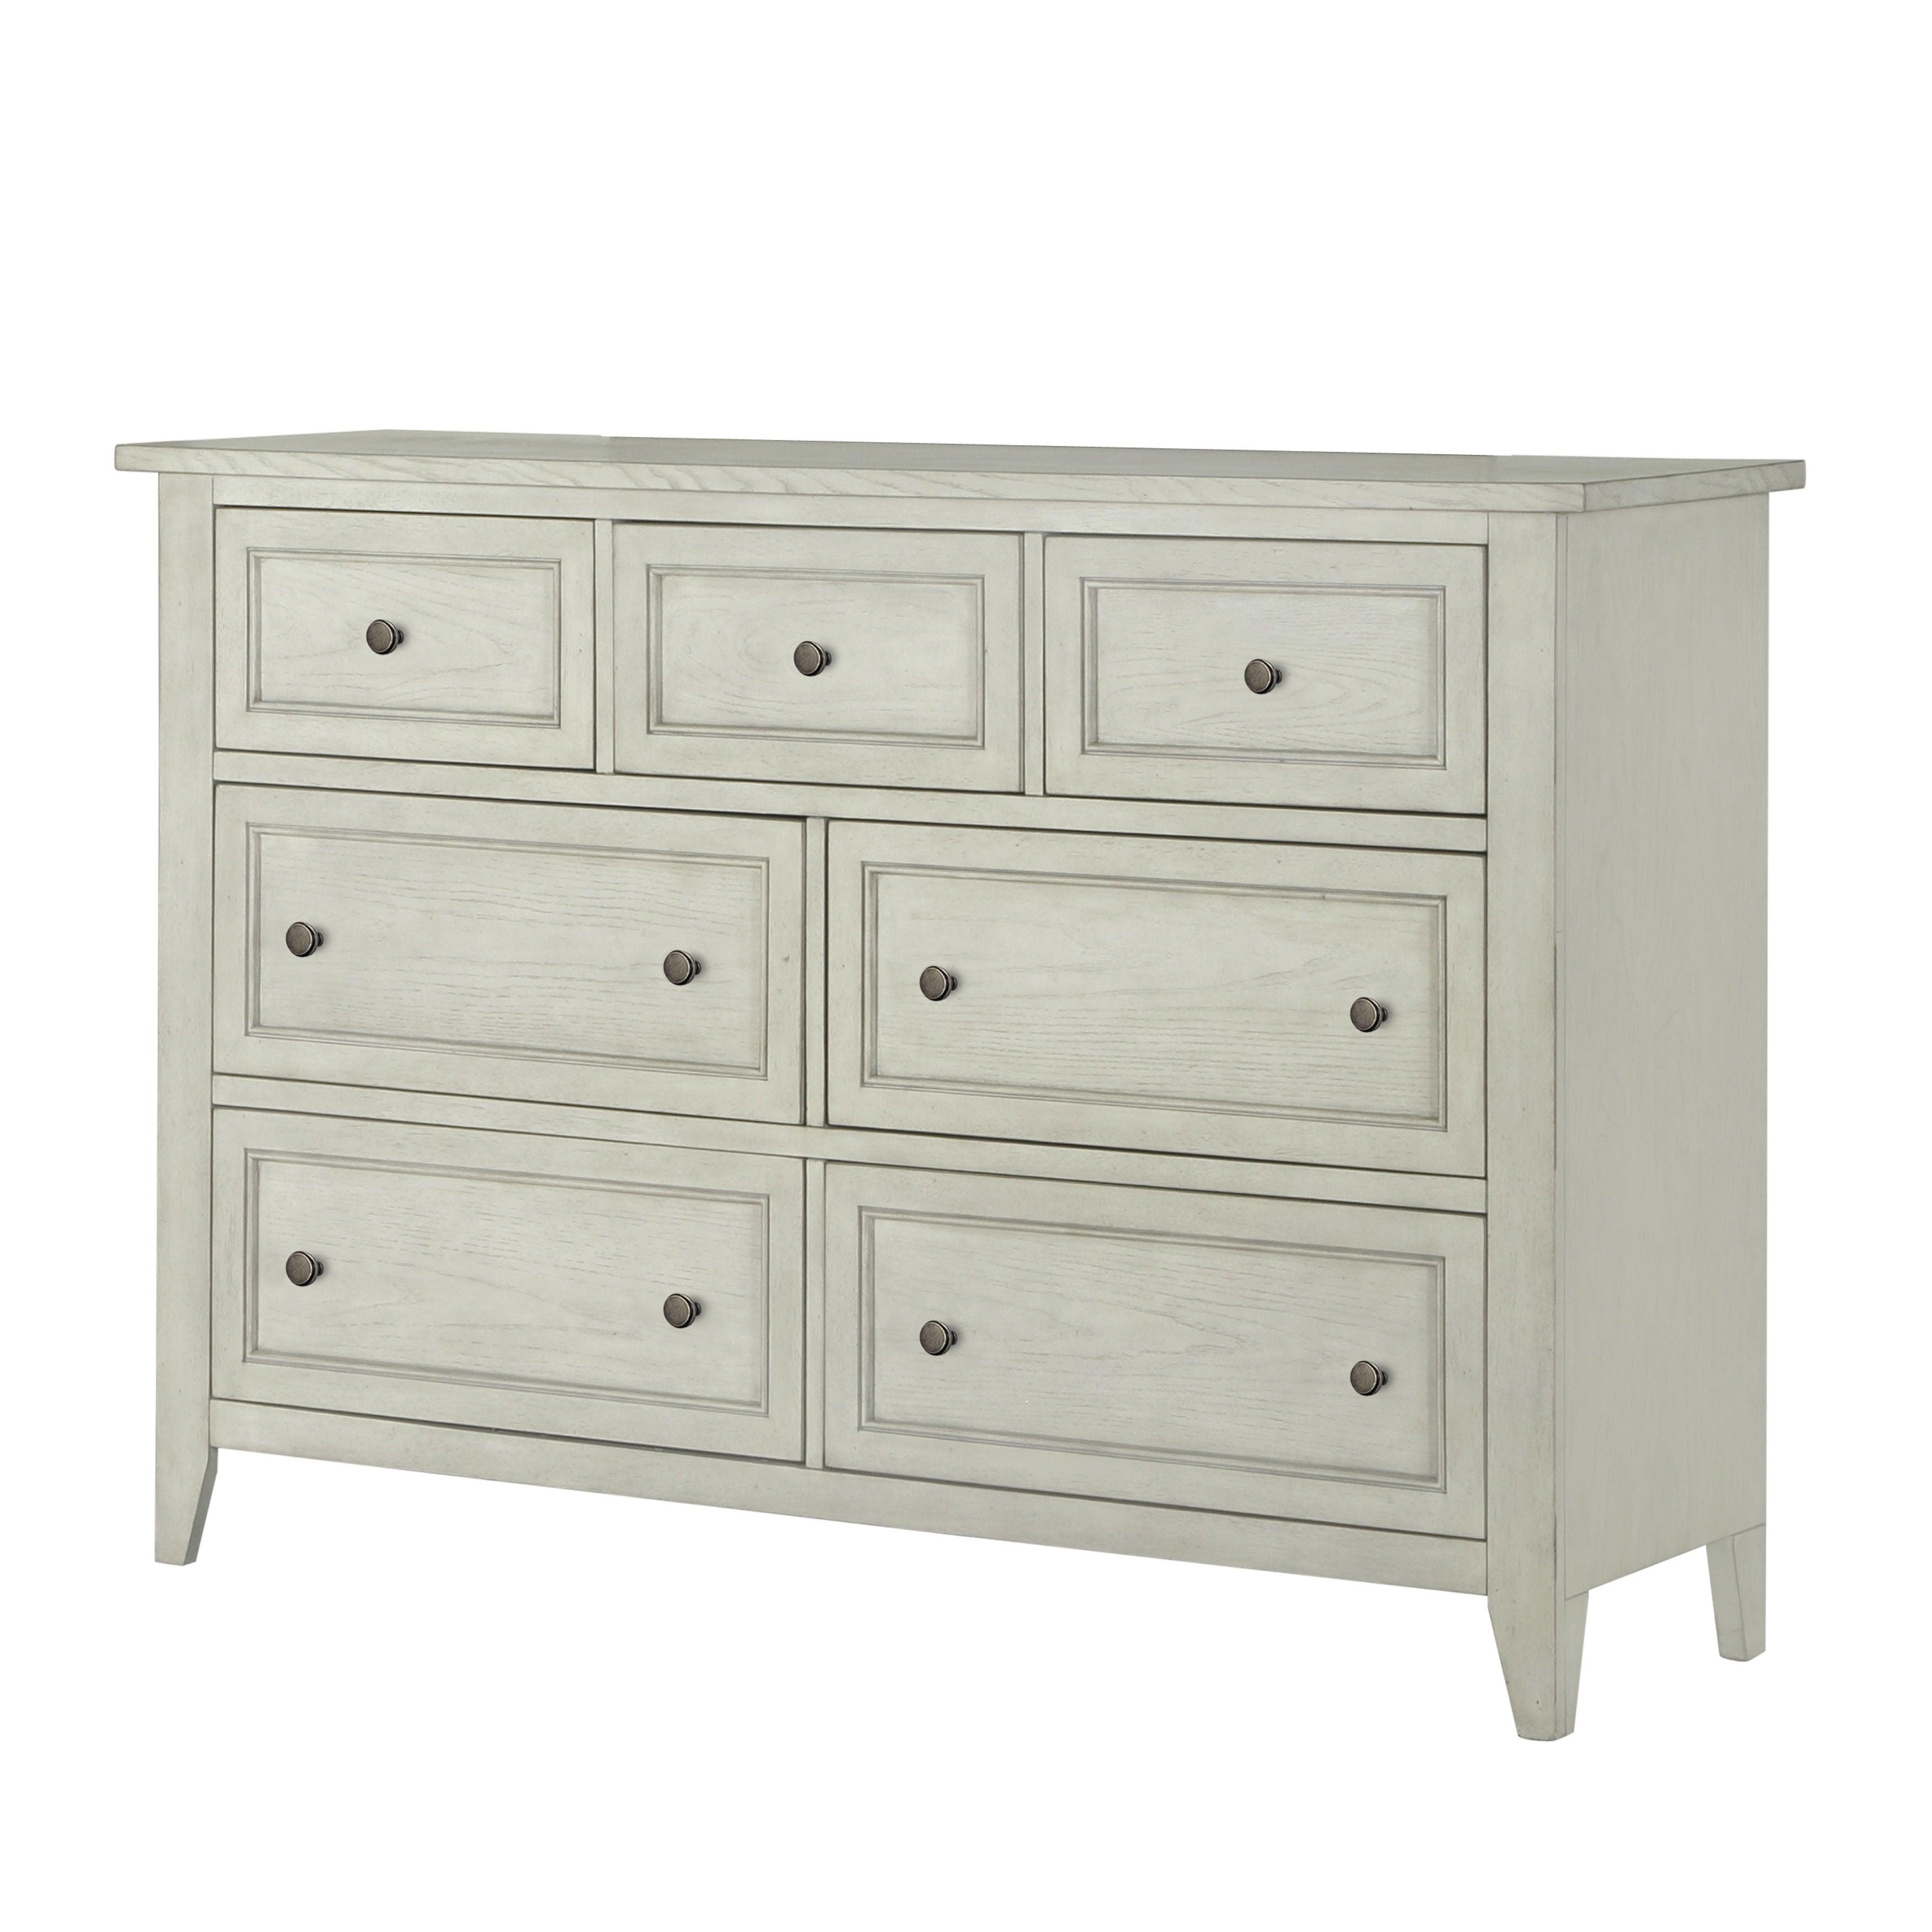 Magnussen Furniture - Raelynn - 7 Drawer Dresser - Weathered White - 5th Avenue Furniture